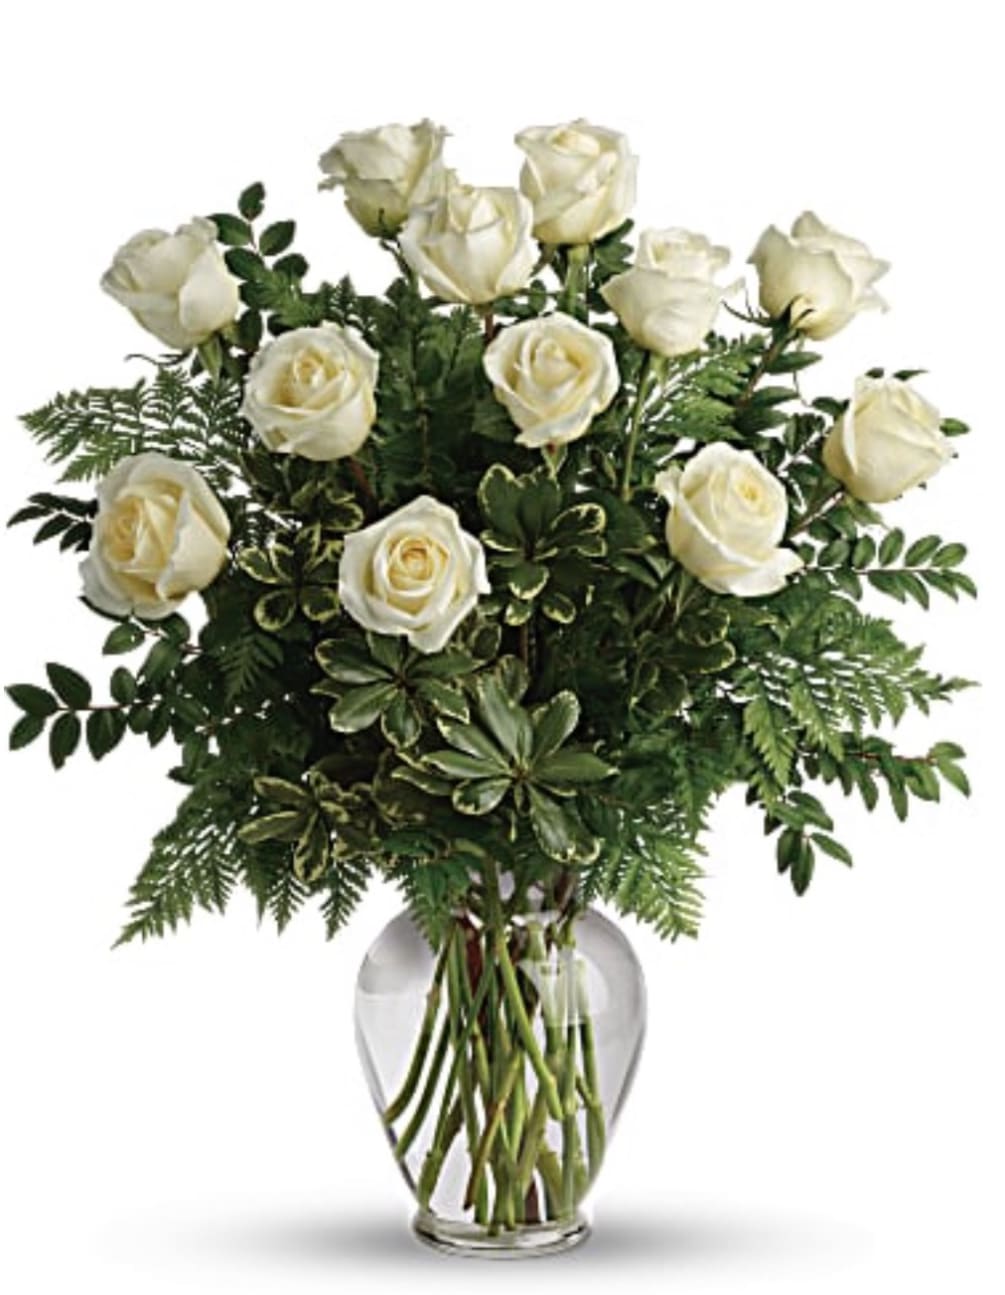 1 Dozen wondrous white roses take center stage in this chic bouquet